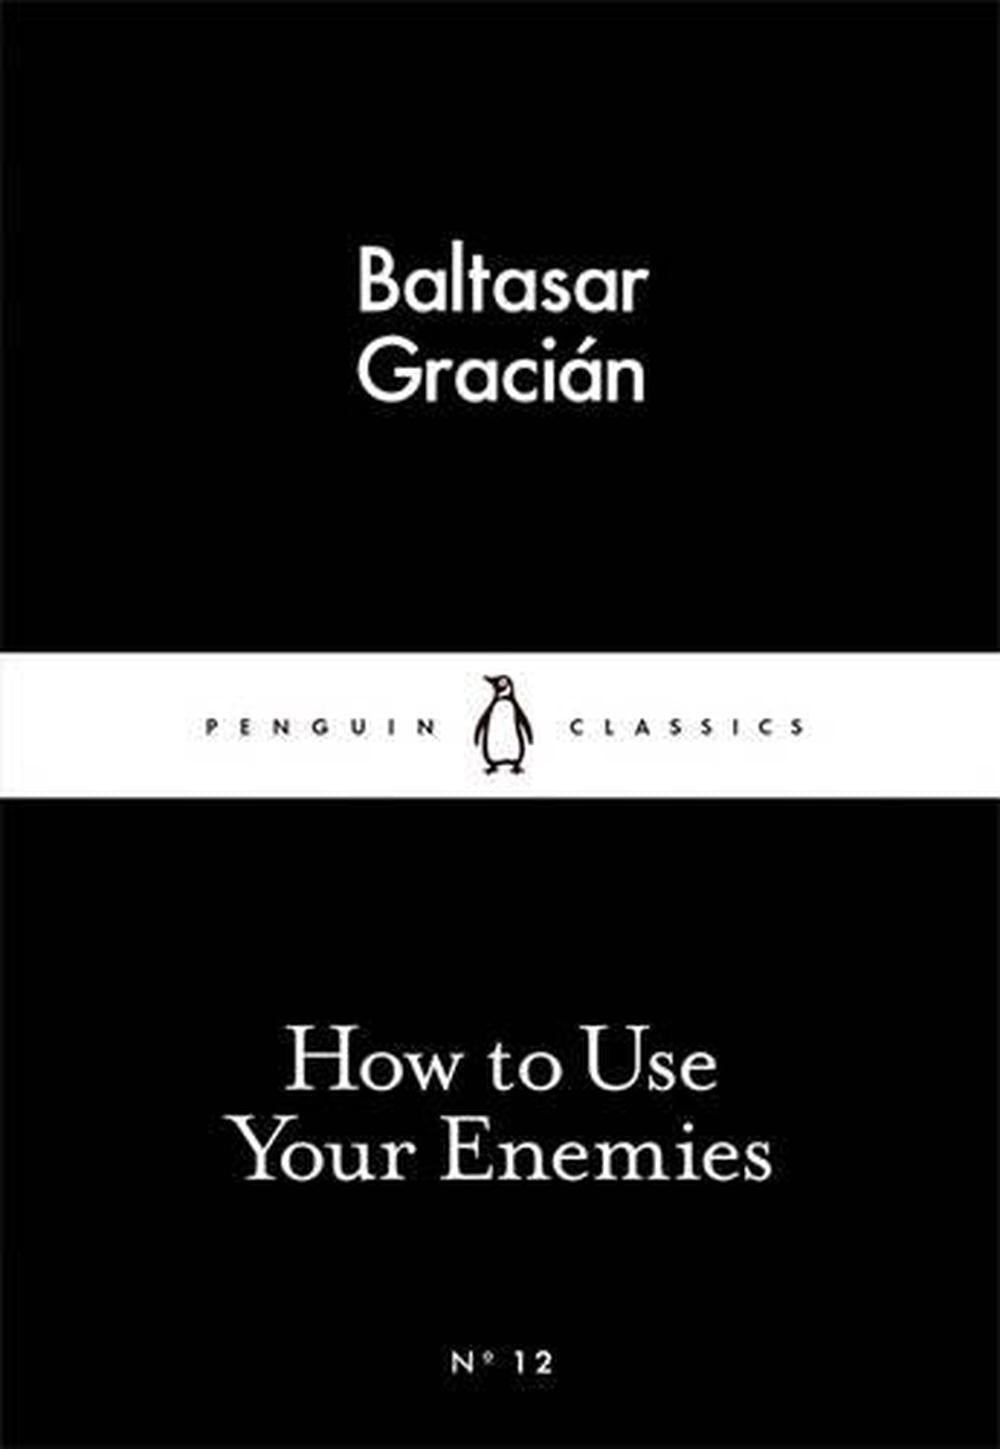 How to Use Your Enemies ร้านหนังสือและสิ่งของ เป็นร้านหนังสือภาษาอังกฤษหายาก และร้านกาแฟ หรือ บุ๊คคาเฟ่ ตั้งอยู่สุขุมวิท กรุงเทพ